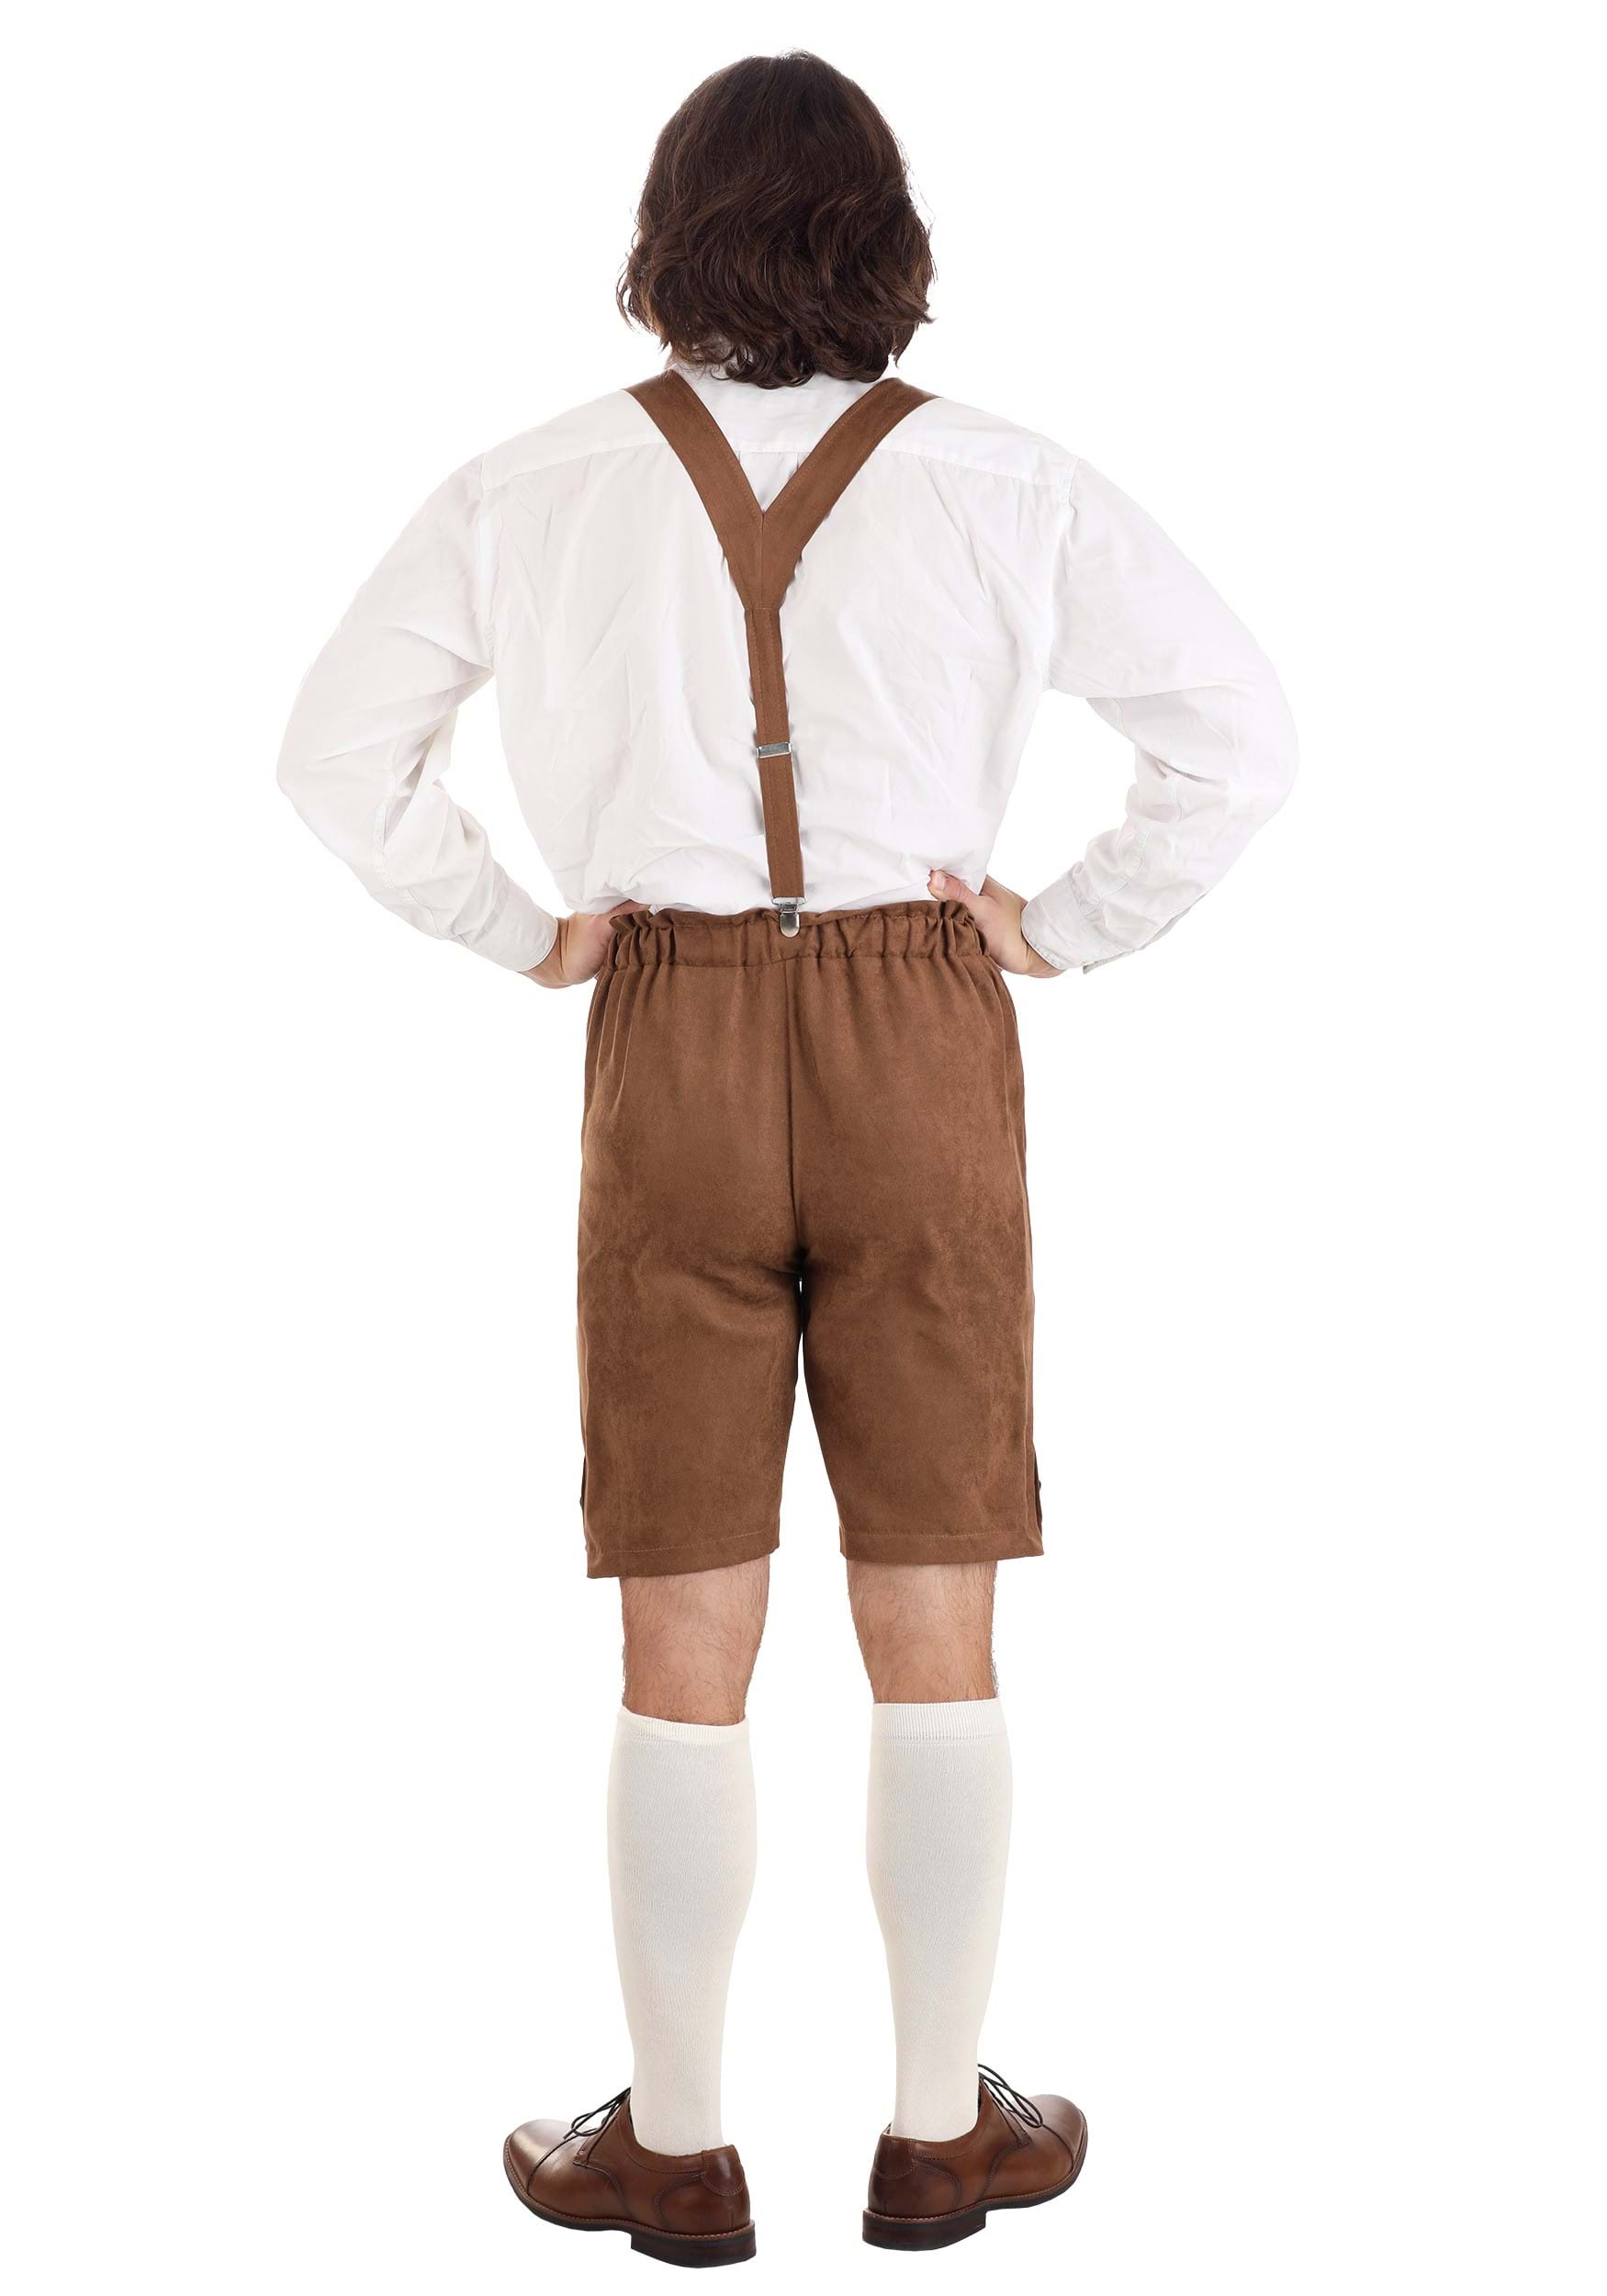 Men's Classic Lederhosen Oktoberfest Costume